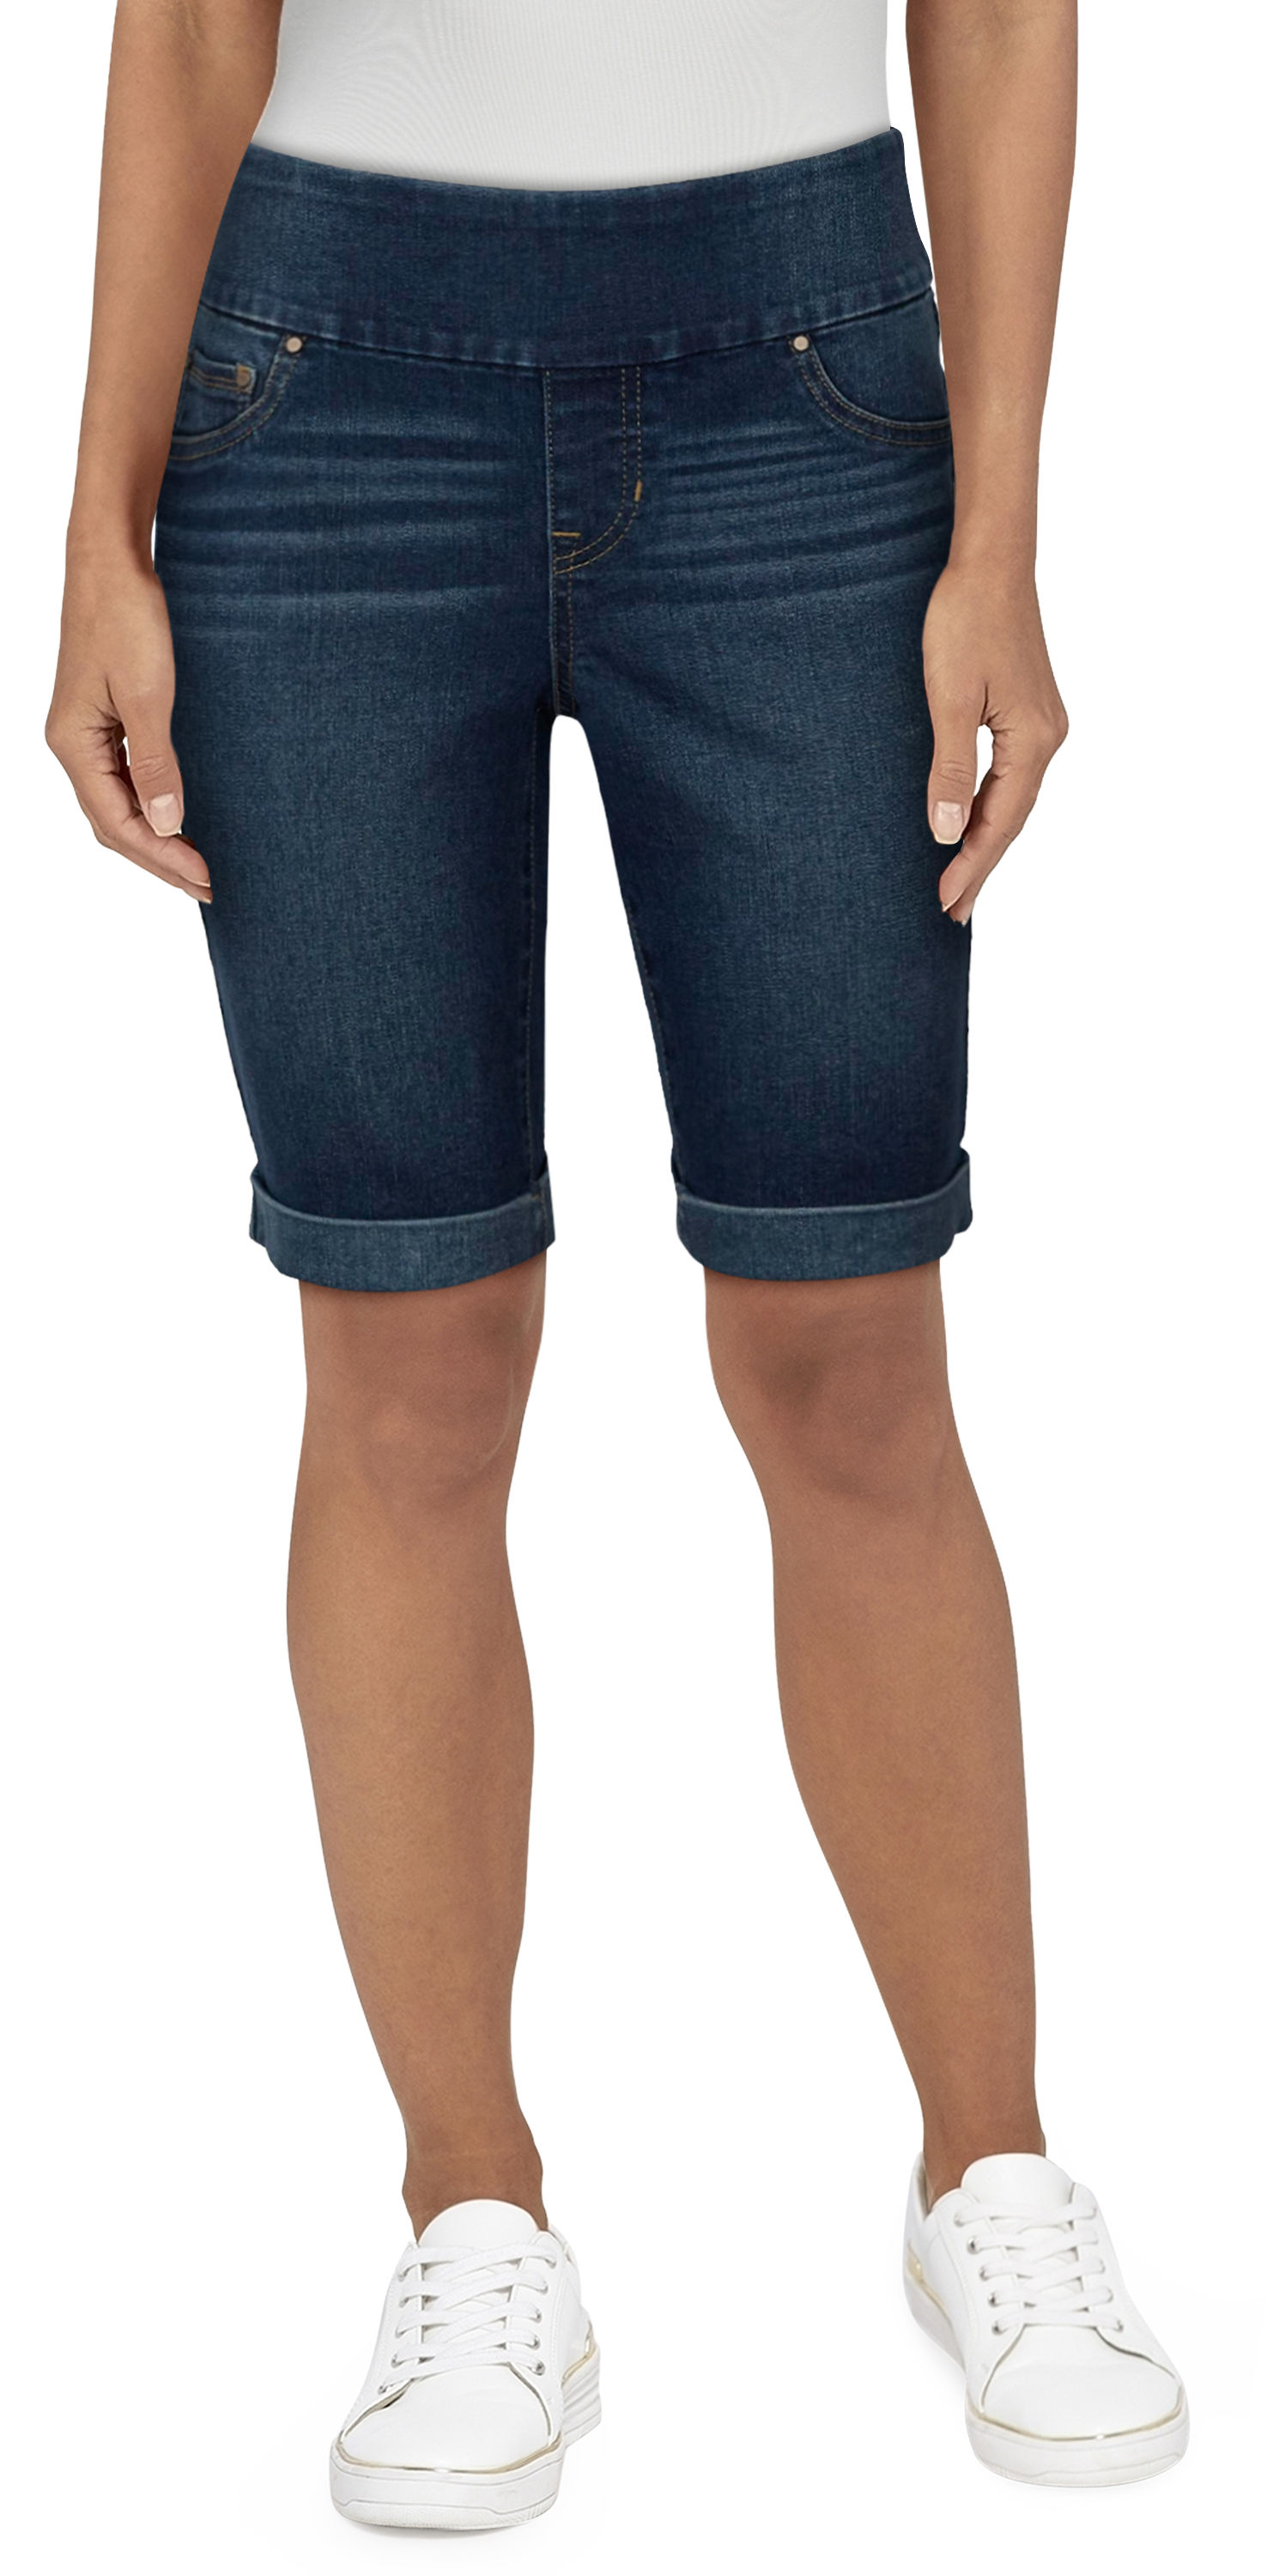 Natural Reflections Comfort Waist Bermuda Shorts for Ladies - Dark Wash - 18